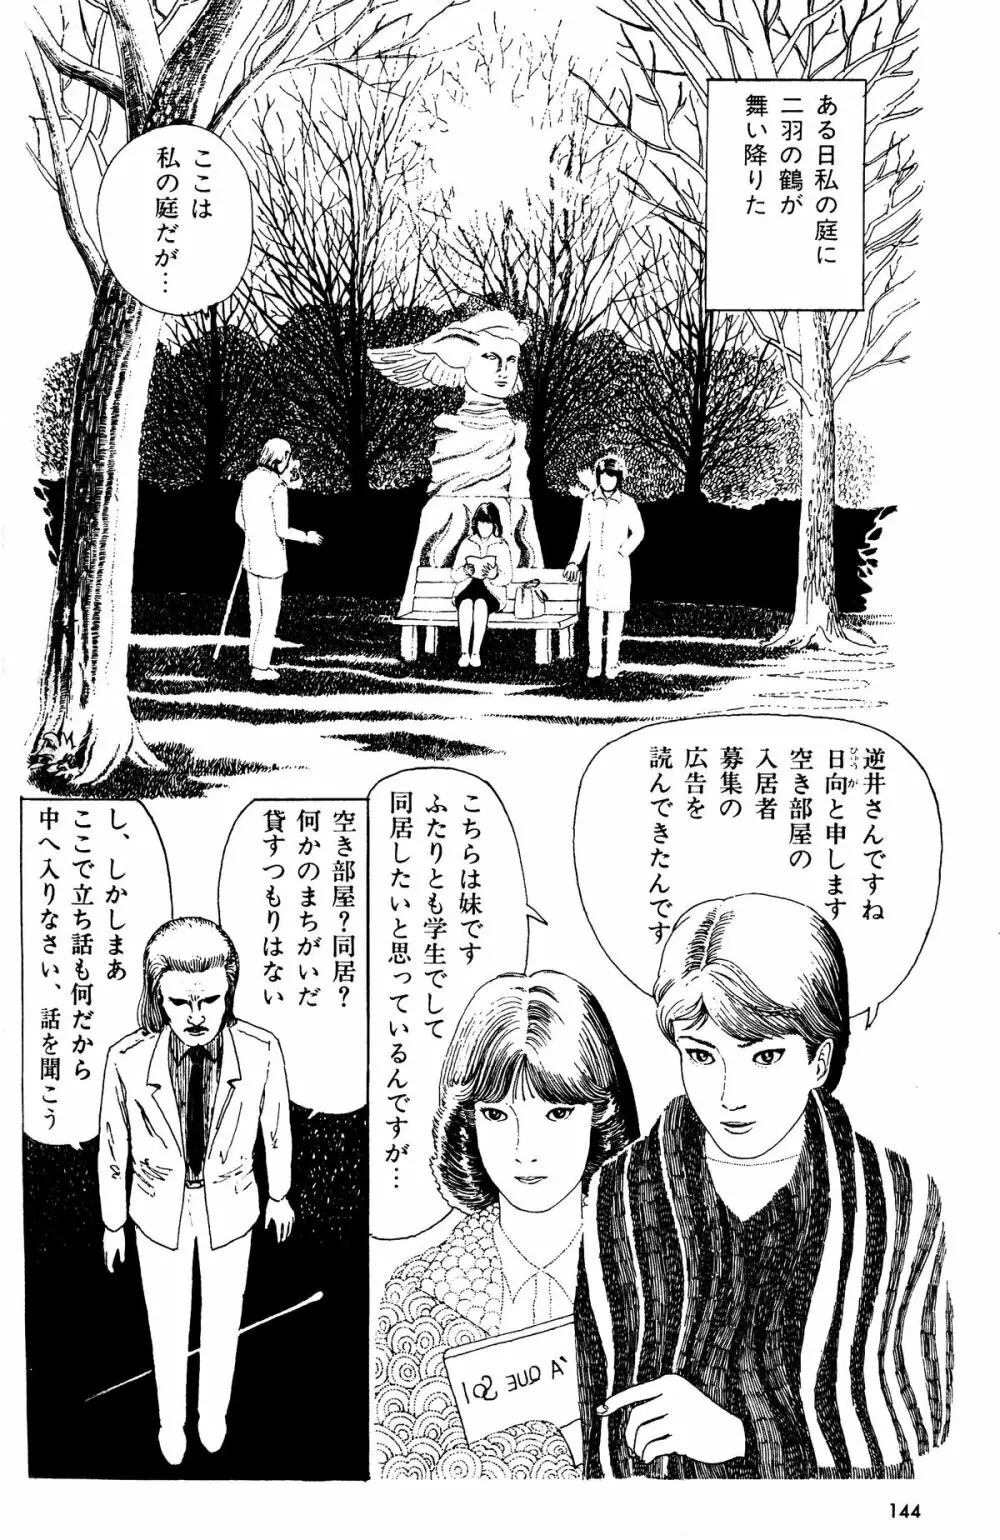 Melon Comic No. 01, メロンコミック 昭和59年6月号 146ページ